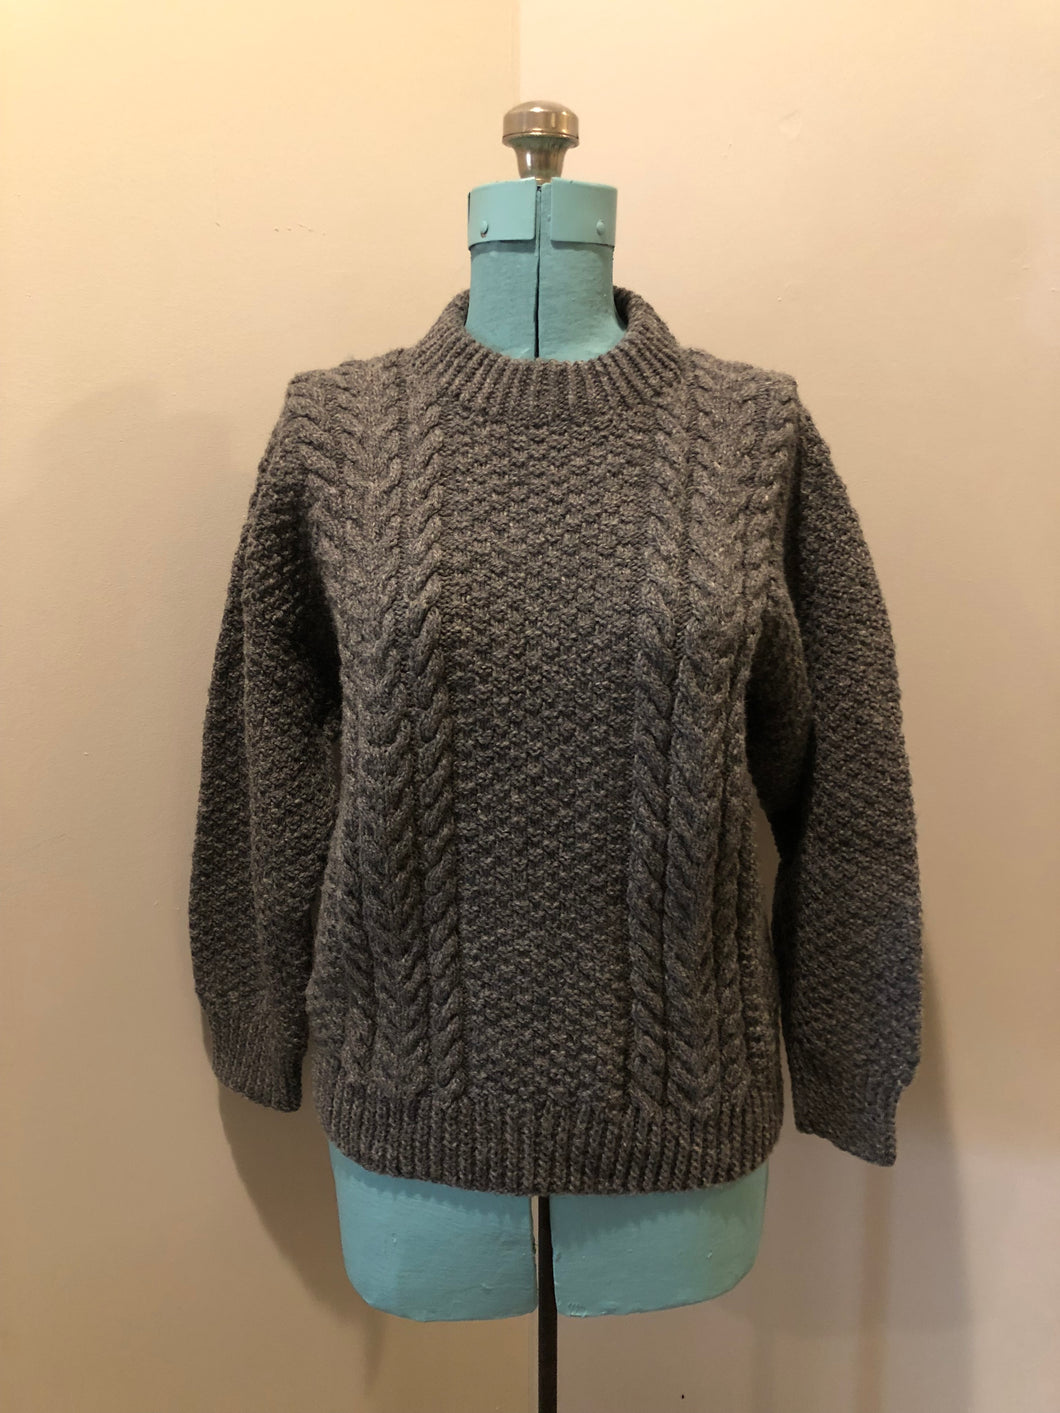 Kingspier Vintage - Vintage Heritage Crafts hand-knit grey wool crewneck sweater.

Made in Nova Scotia, Canada.
Size medium.